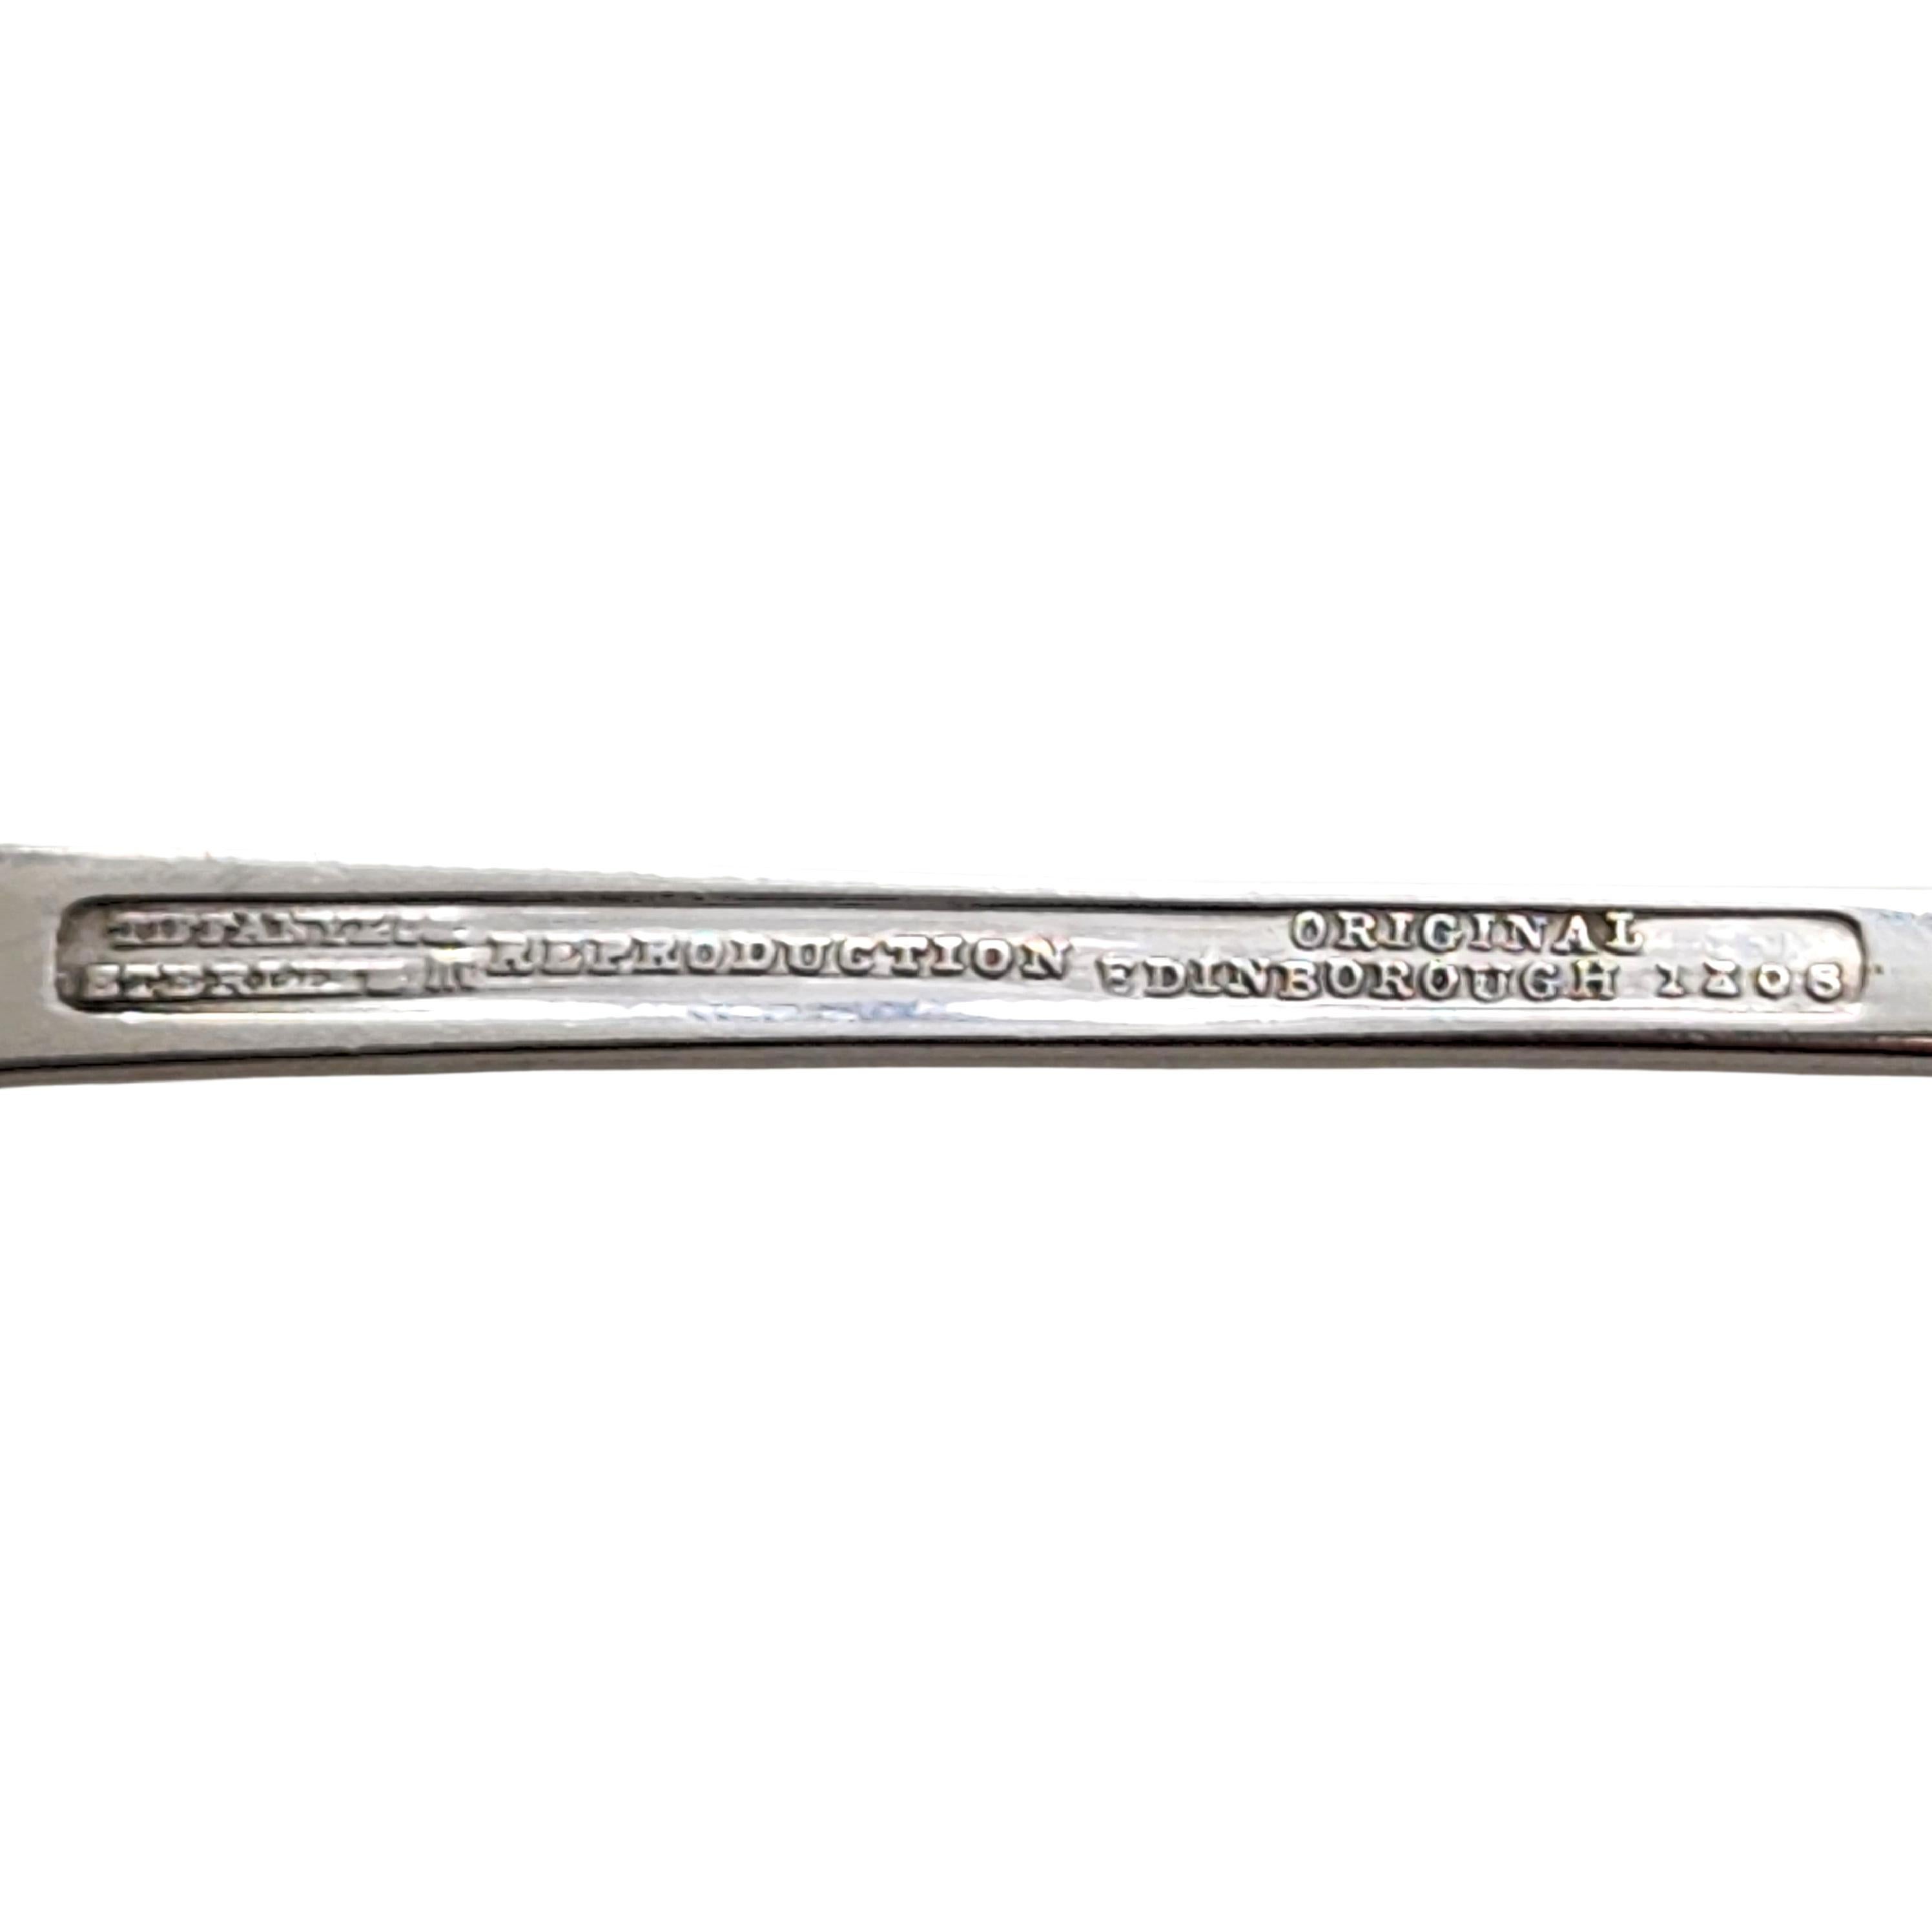 Tiffany & Co Sterling Silver Reproduction Edinborough Ladle #12567 For Sale 5